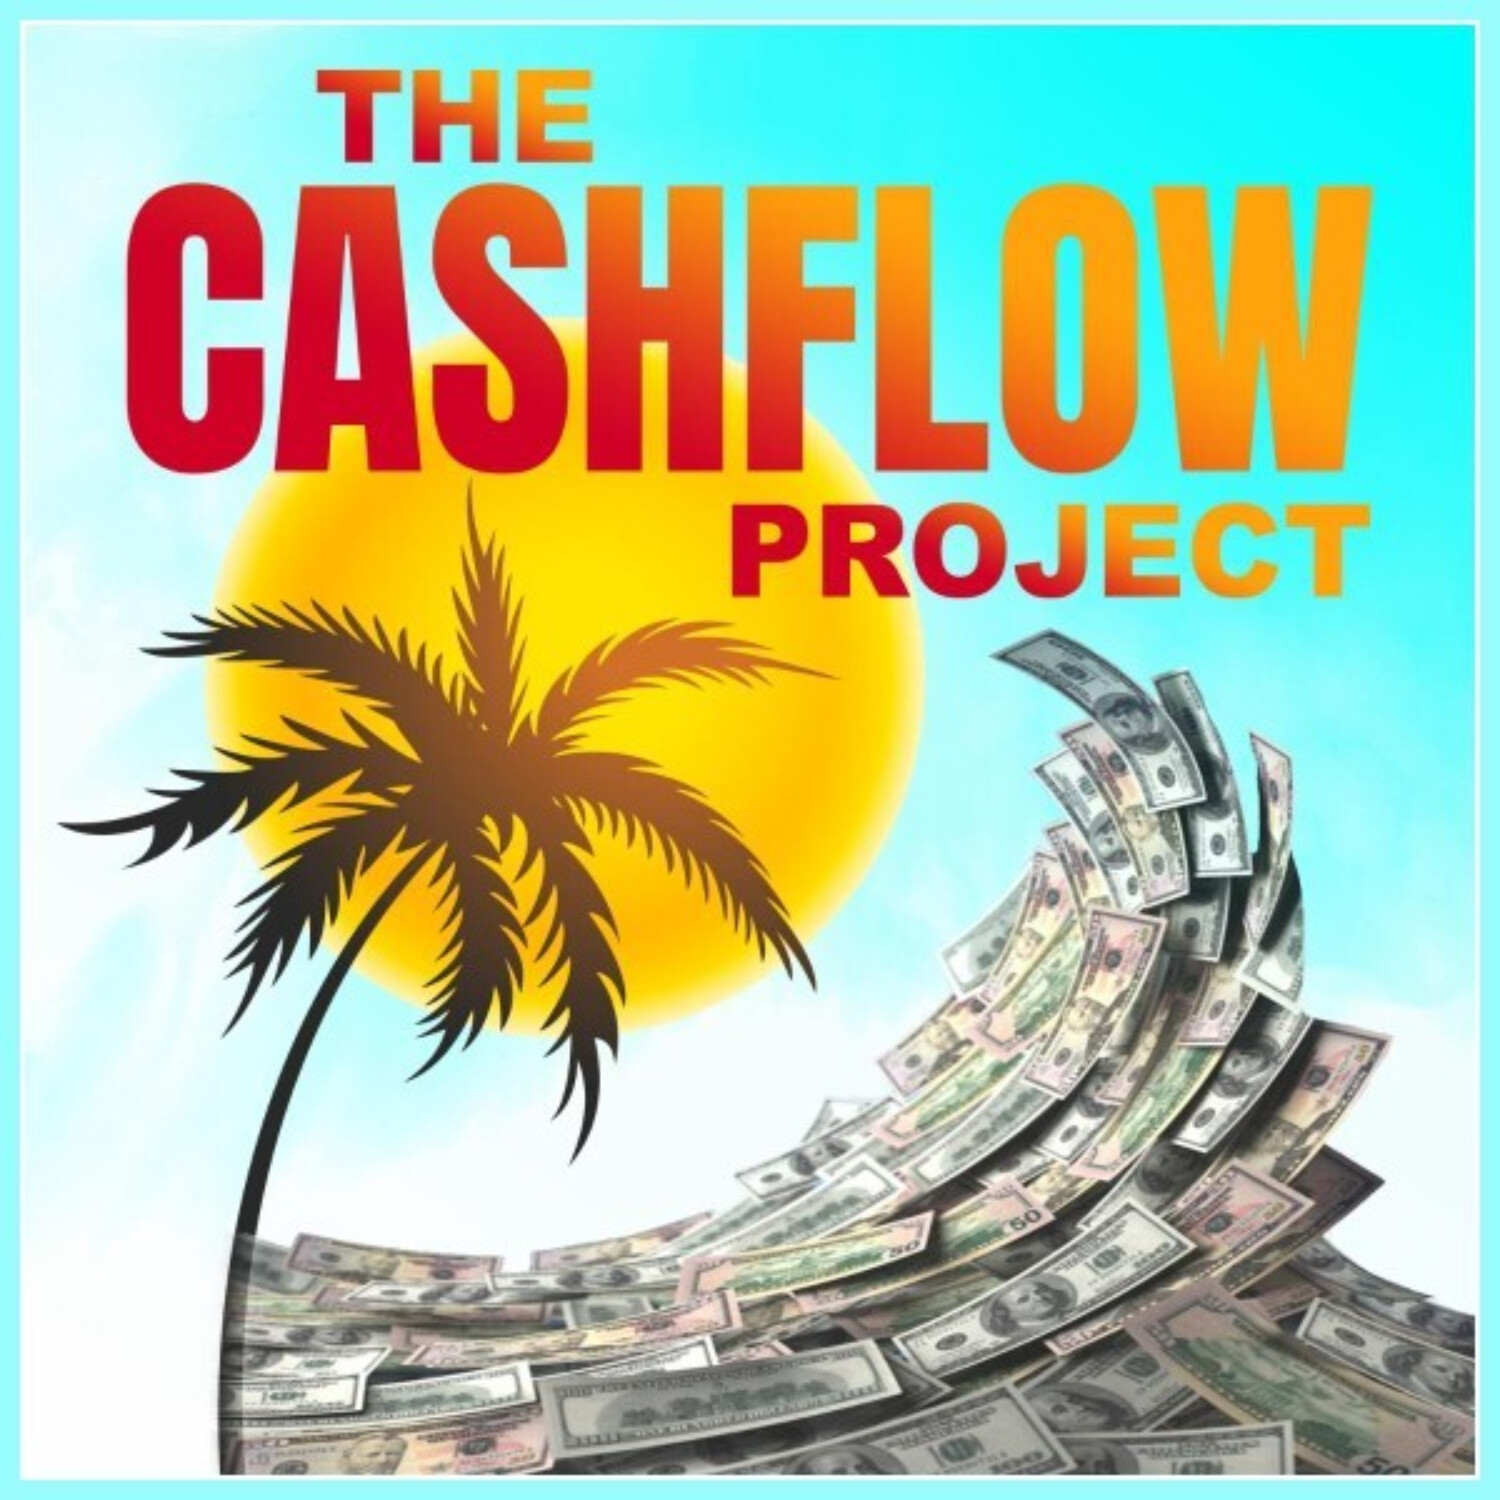 The Cashflow Project